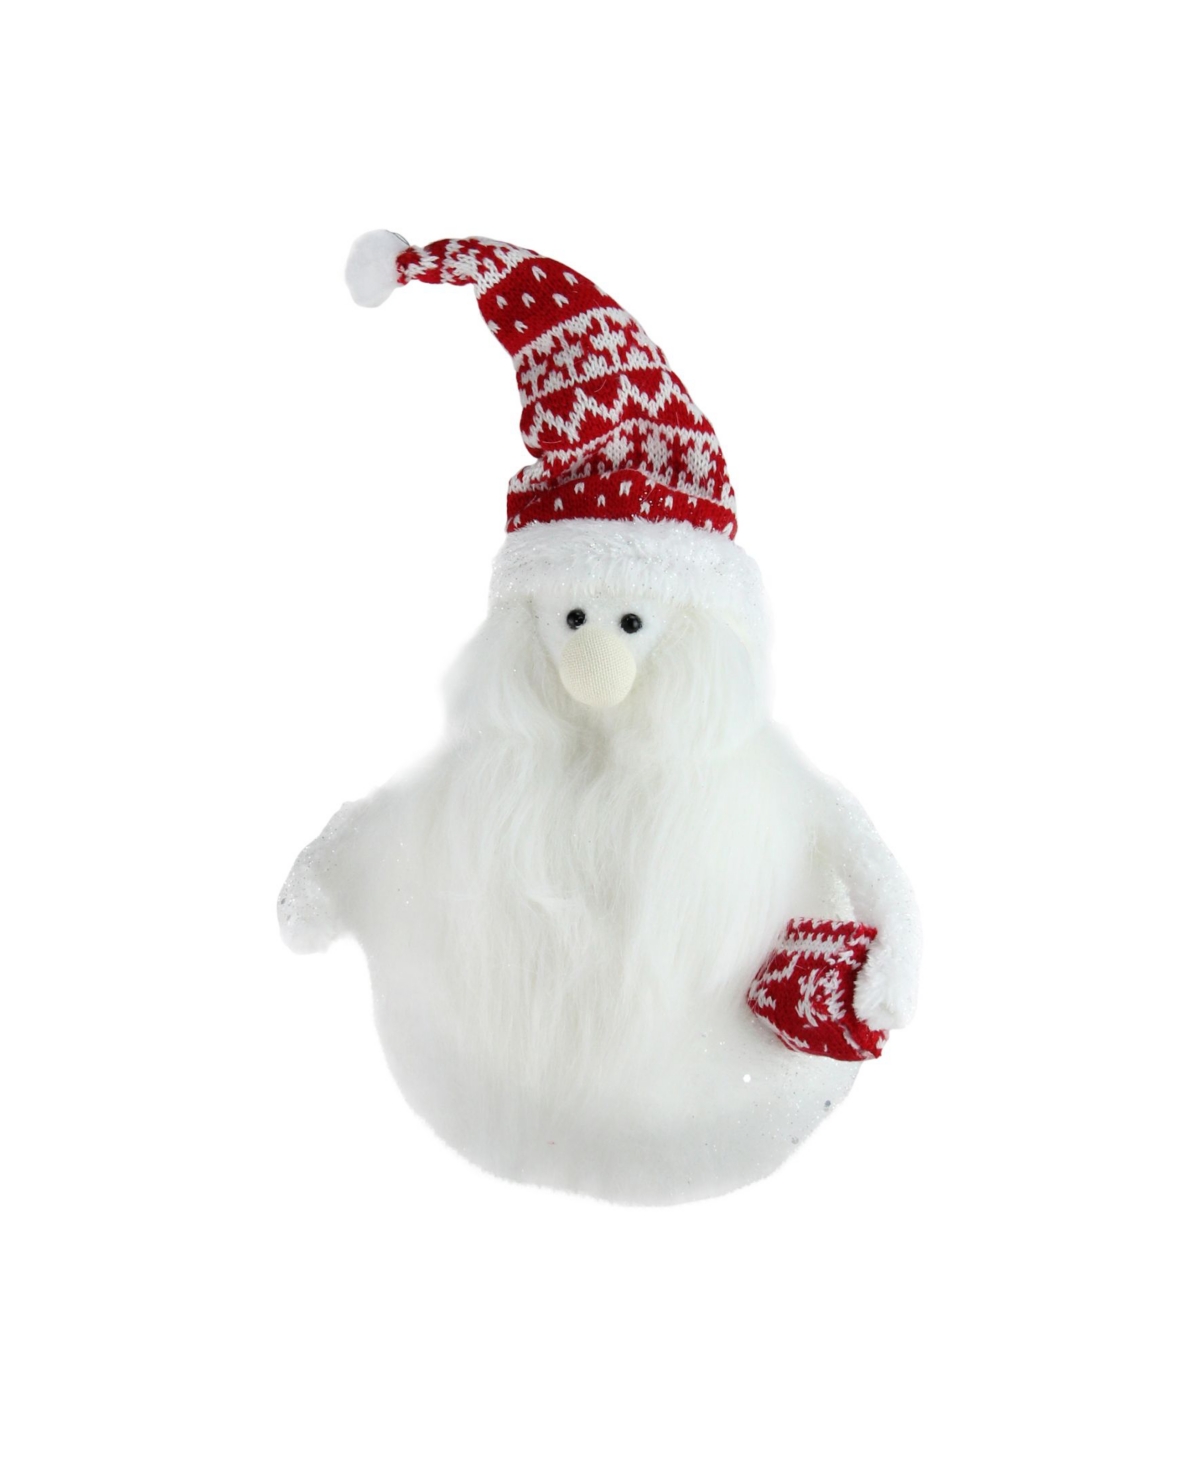 9.25" Red and White "Nordic Noah" Santa Gnome Christmas decoration - White